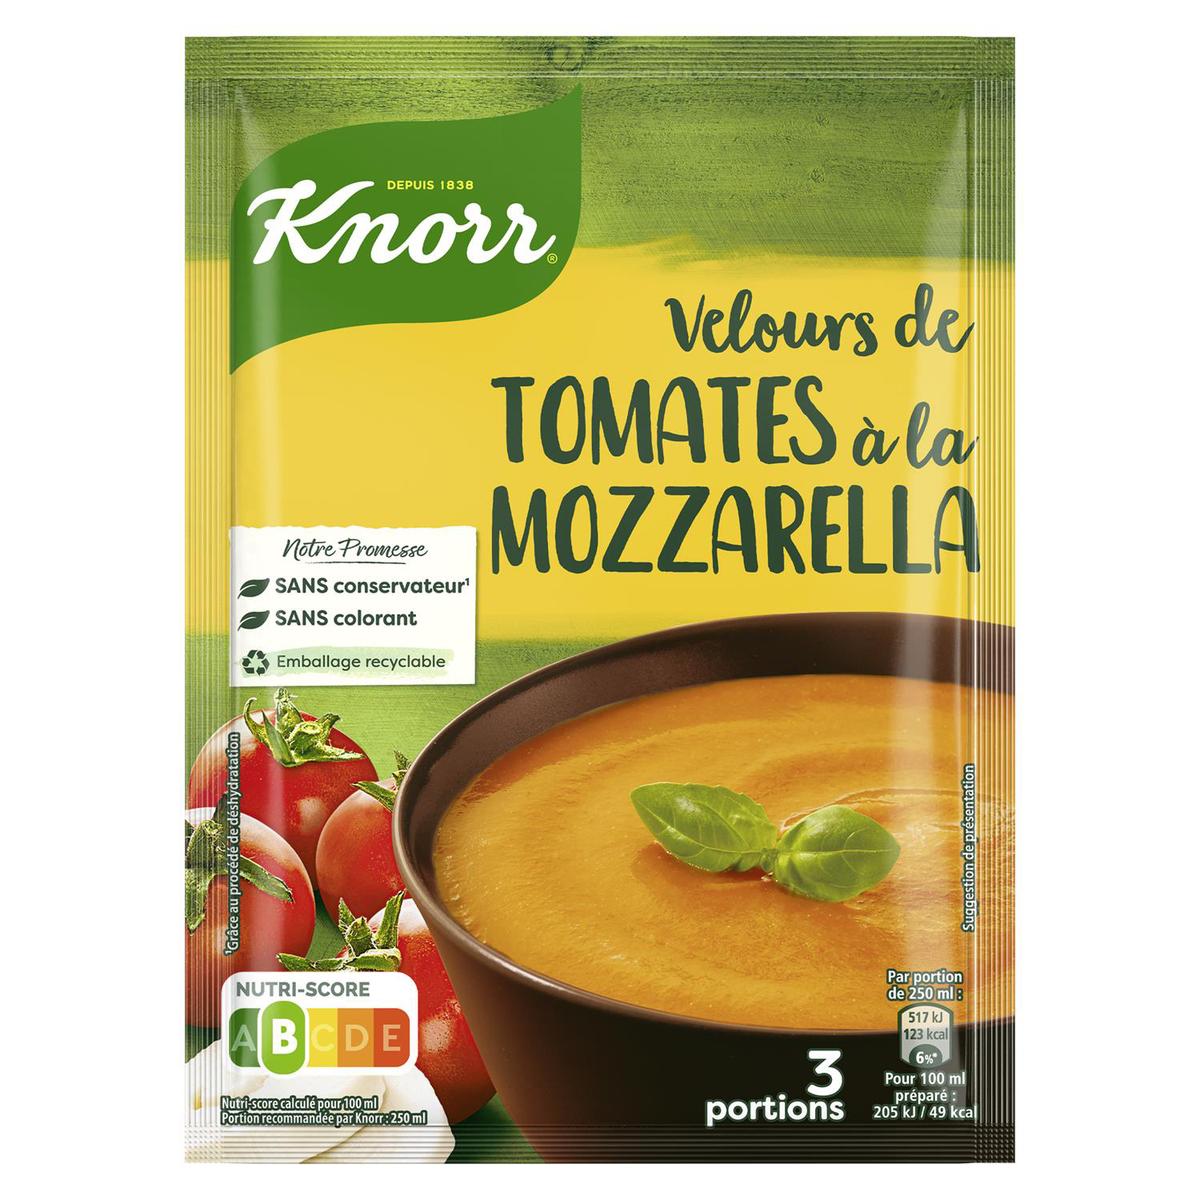 Soupe tomates et pointe d'herbes déshydratée bio KNORR, 45g - Super U,  Hyper U, U Express 